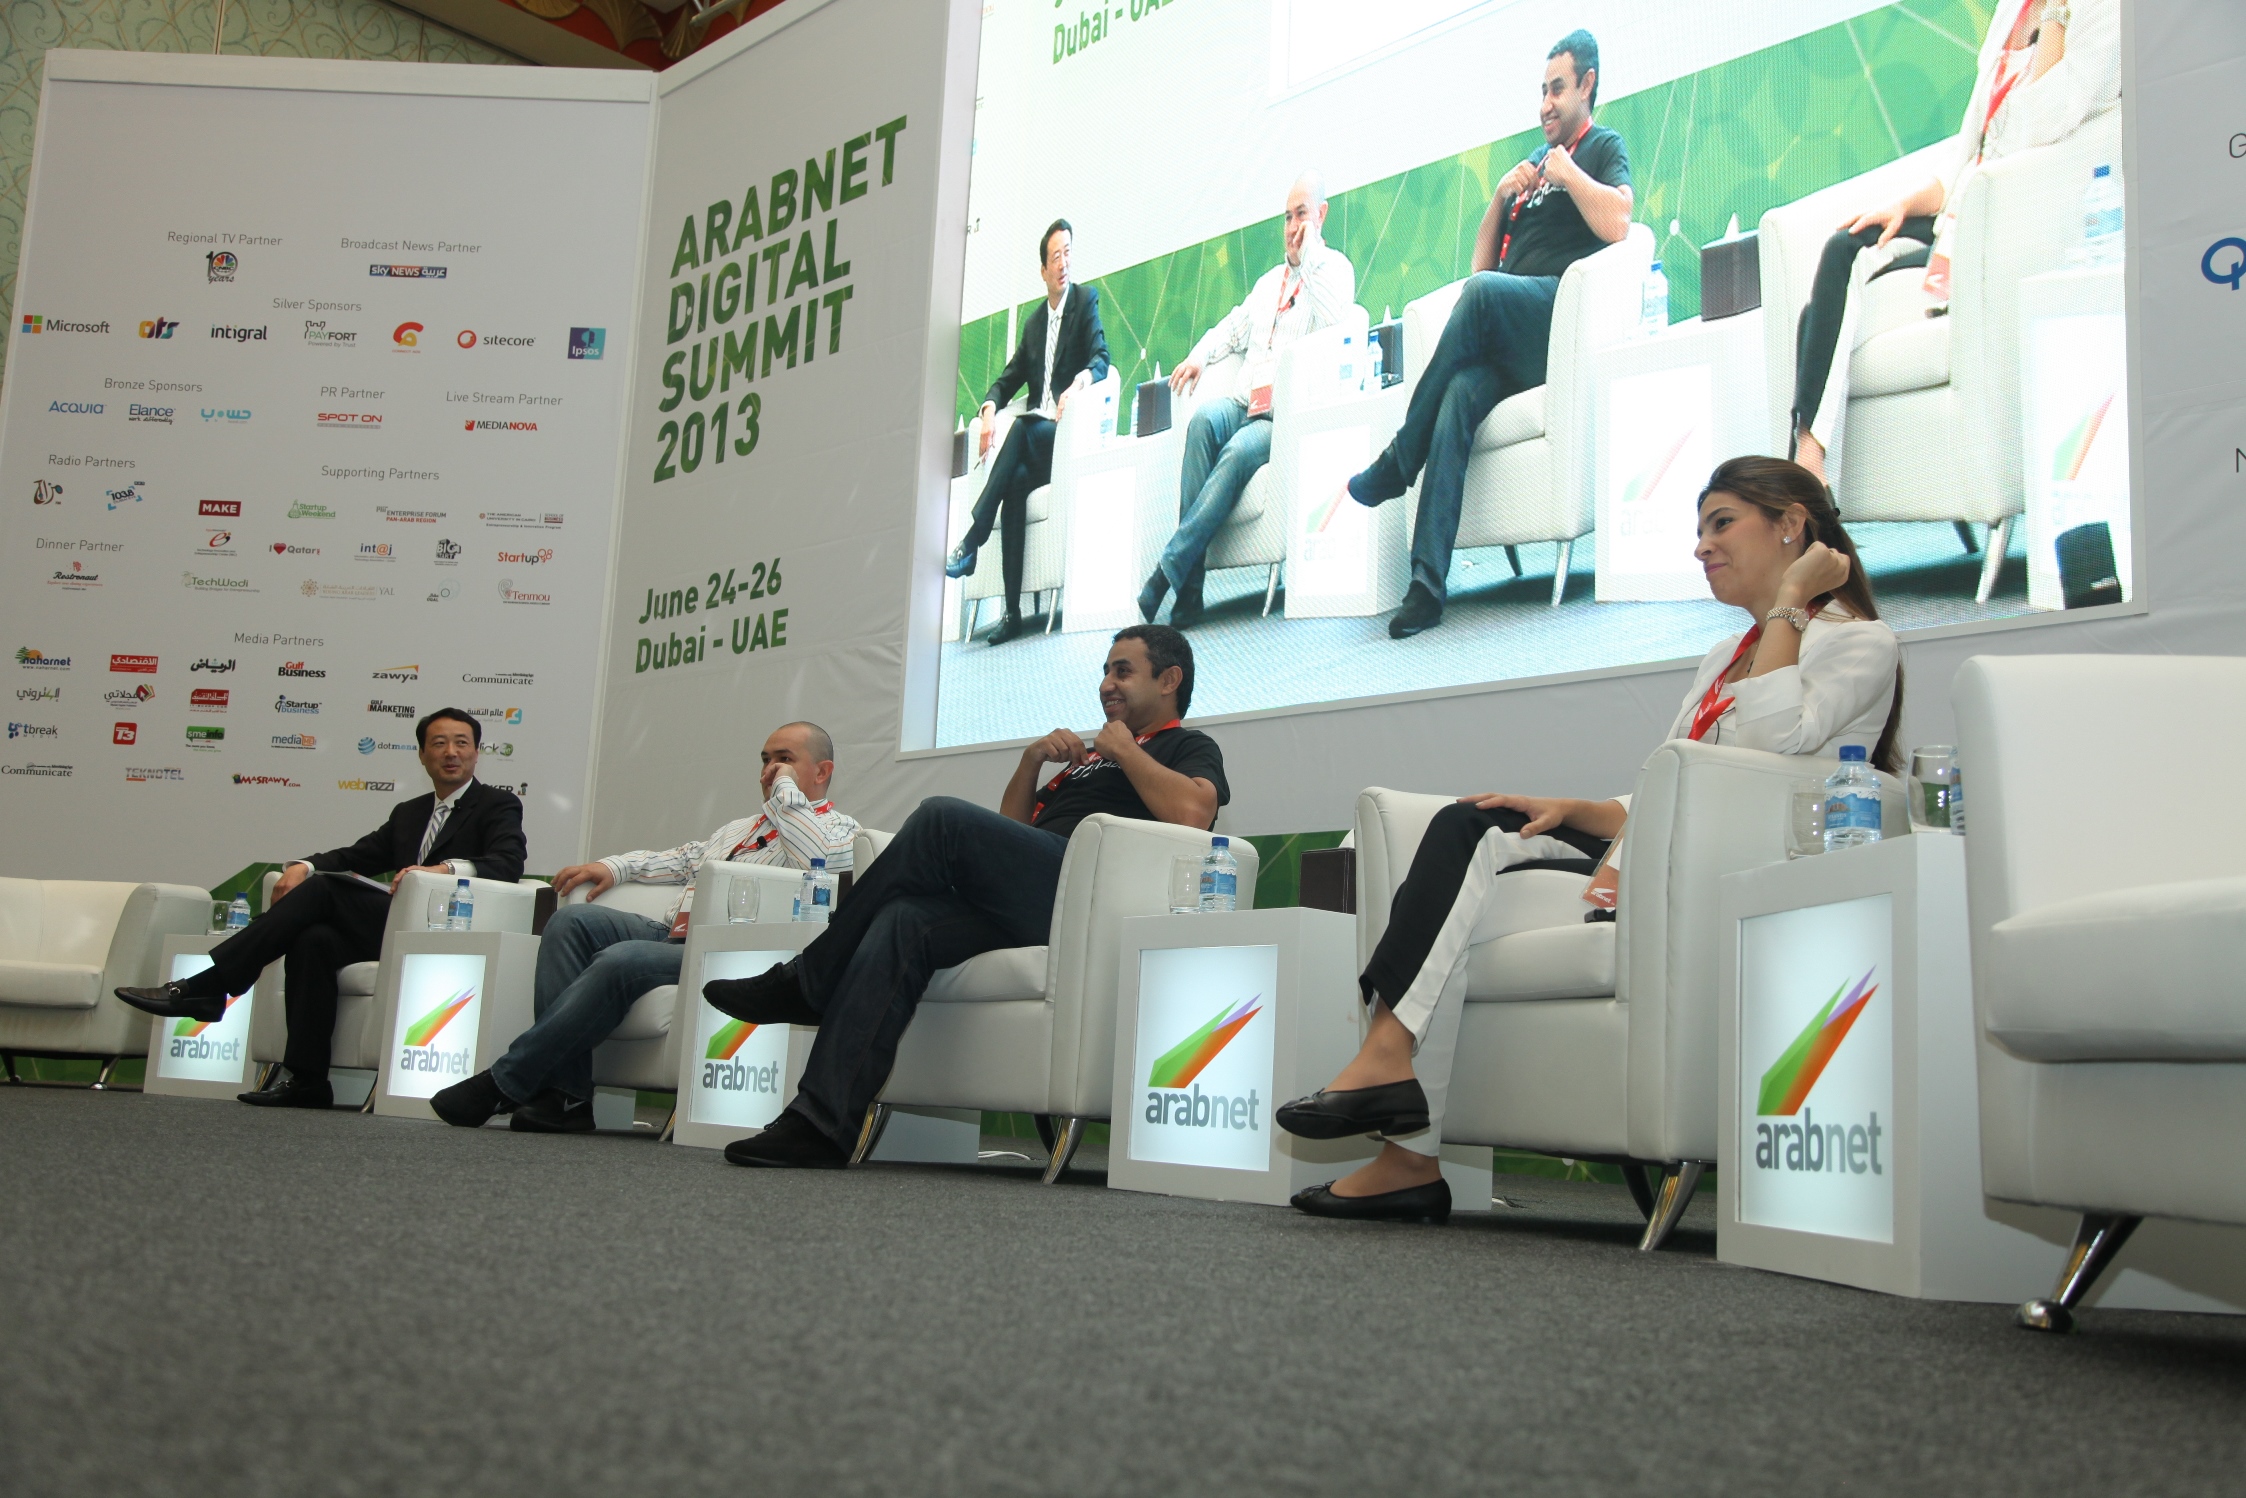 ArabNet Digital Summit 2013